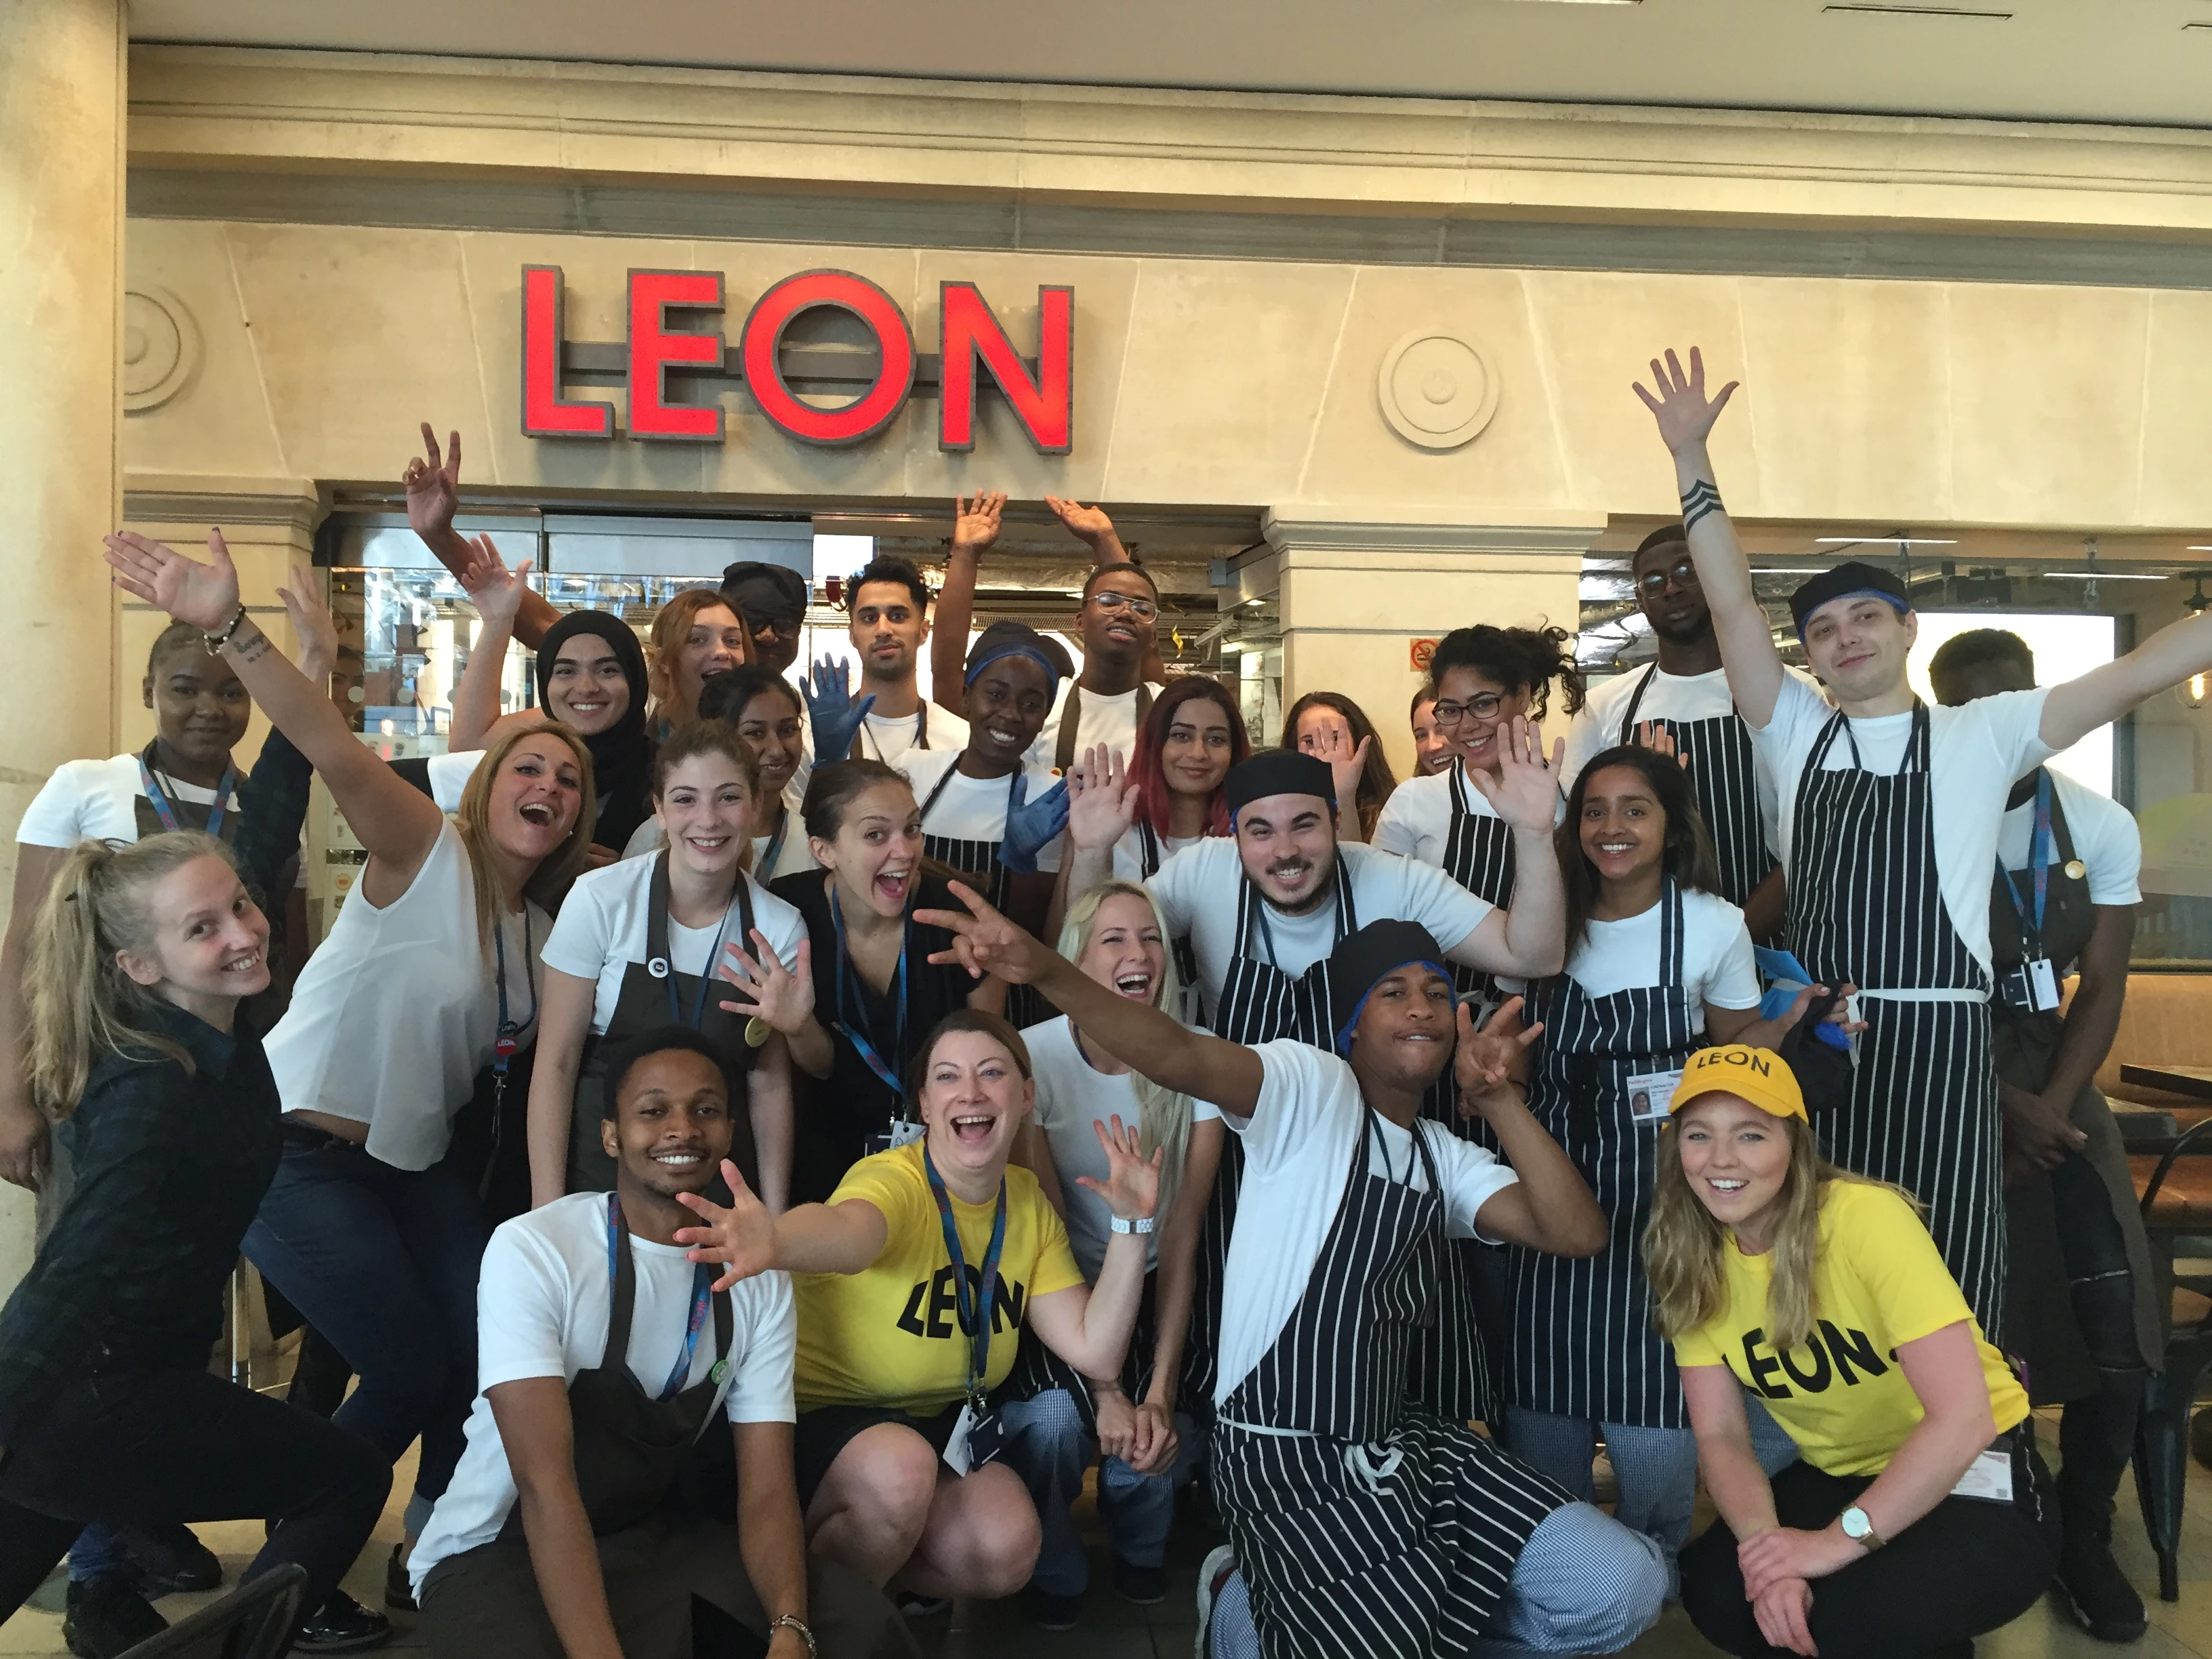 The Leon team at Paddington Station.